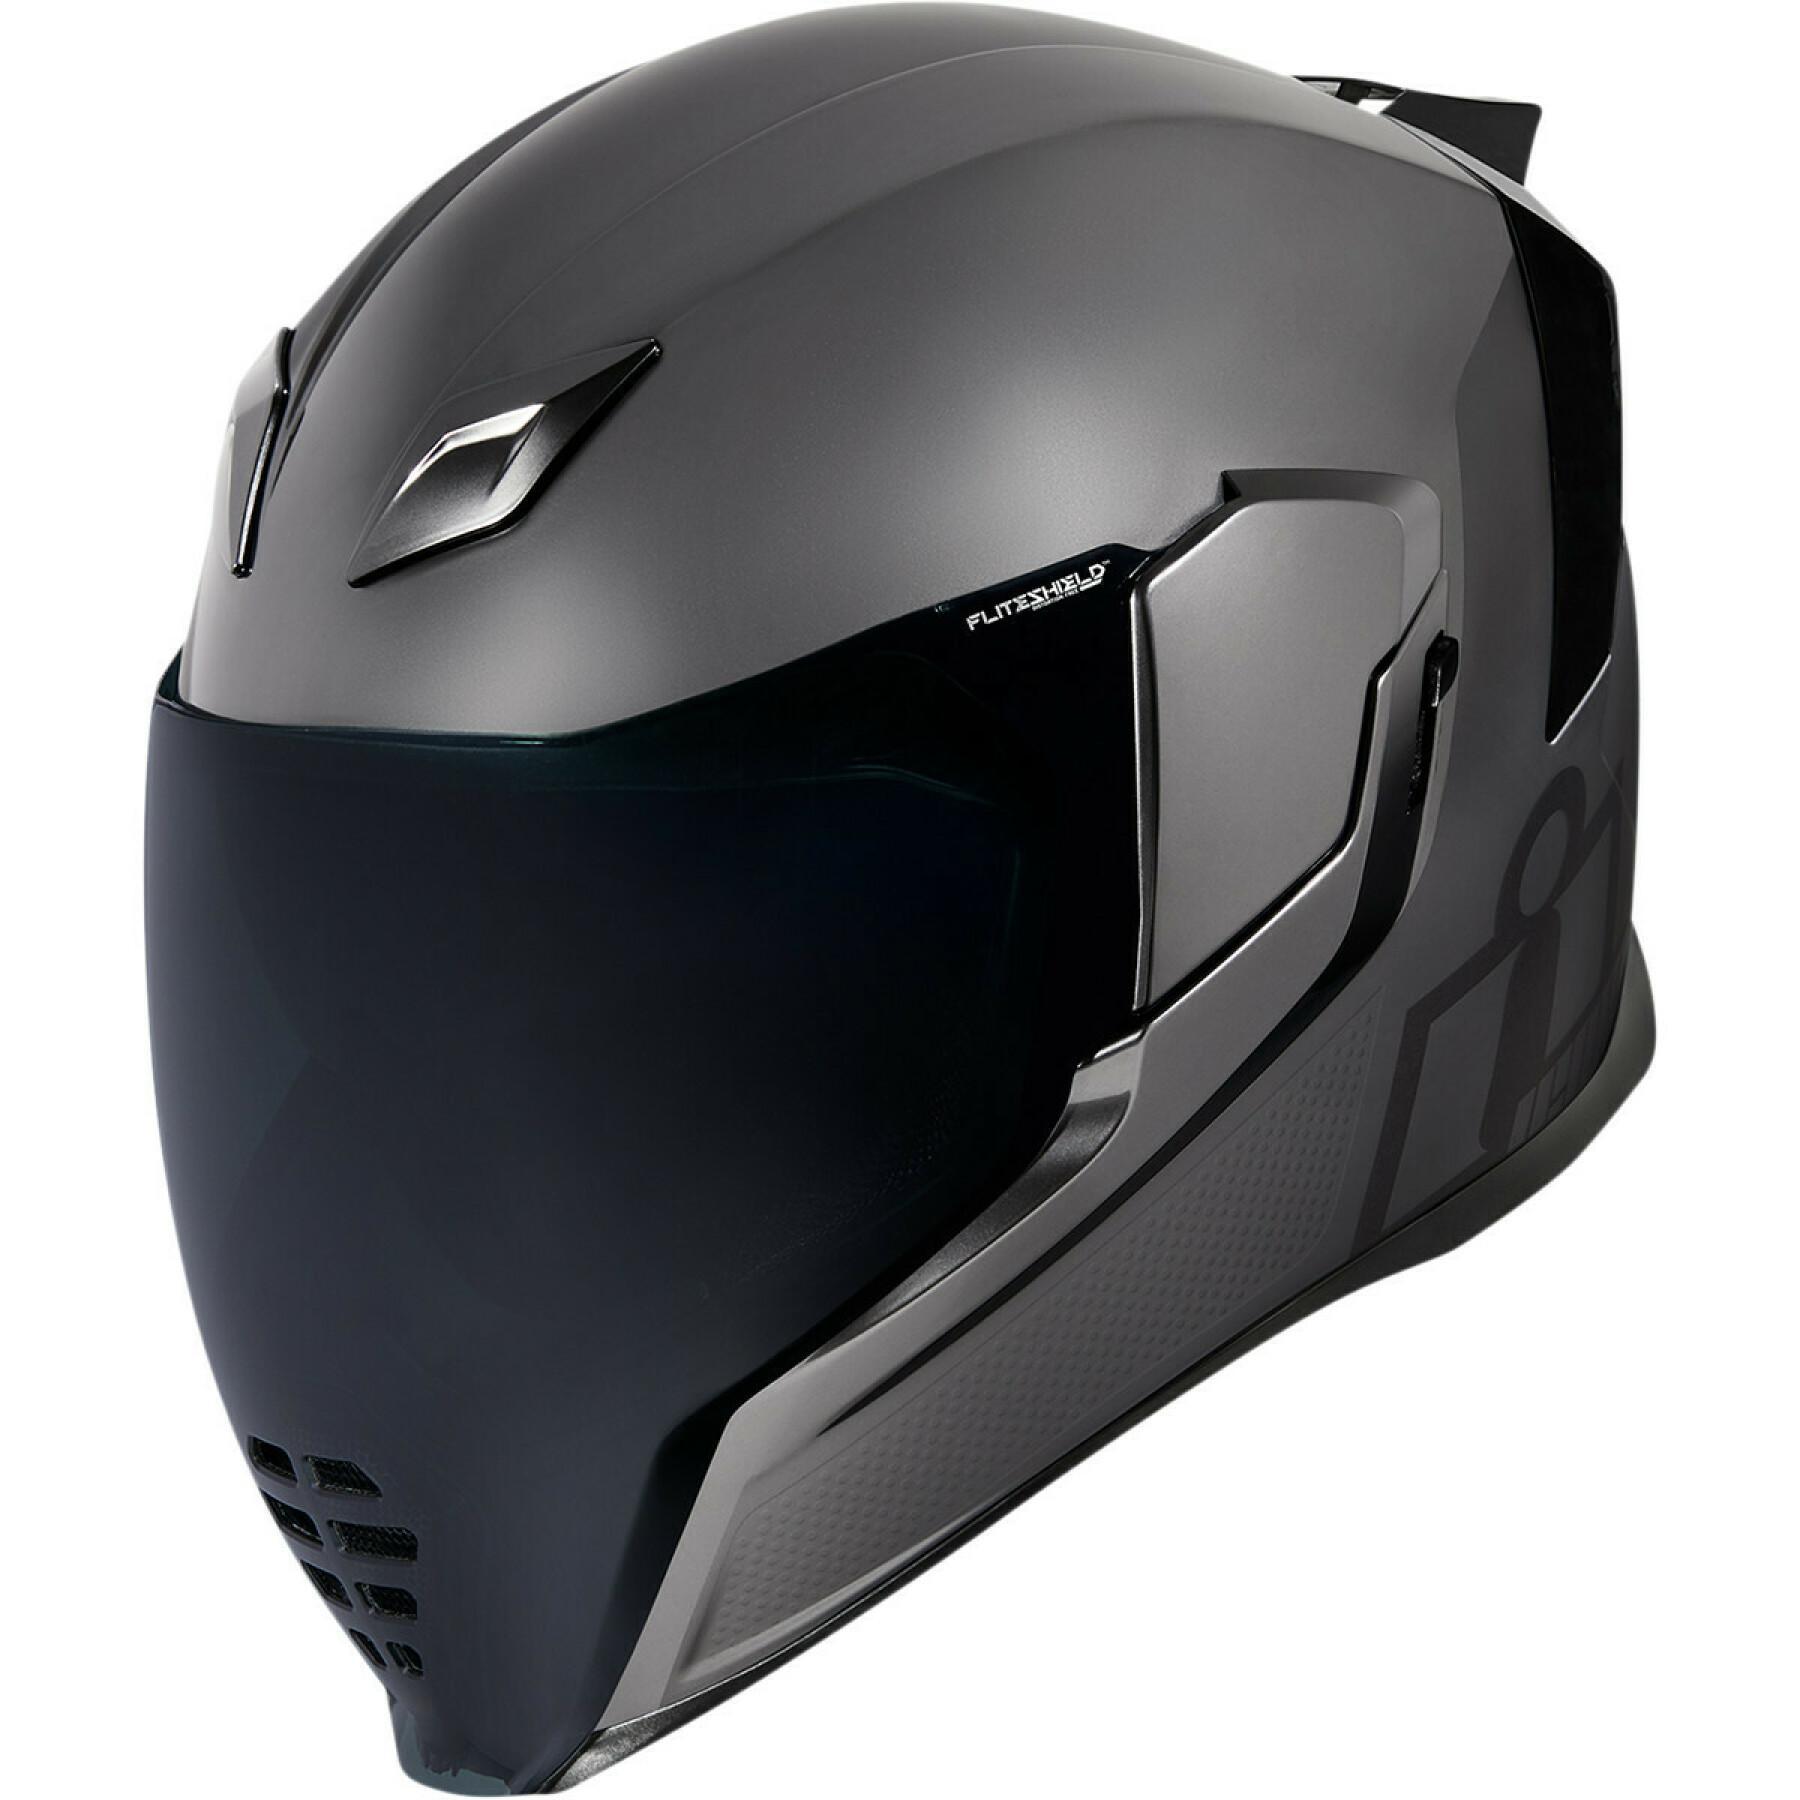 Full face motorcycle helmet Icon aflt mips jewl sv